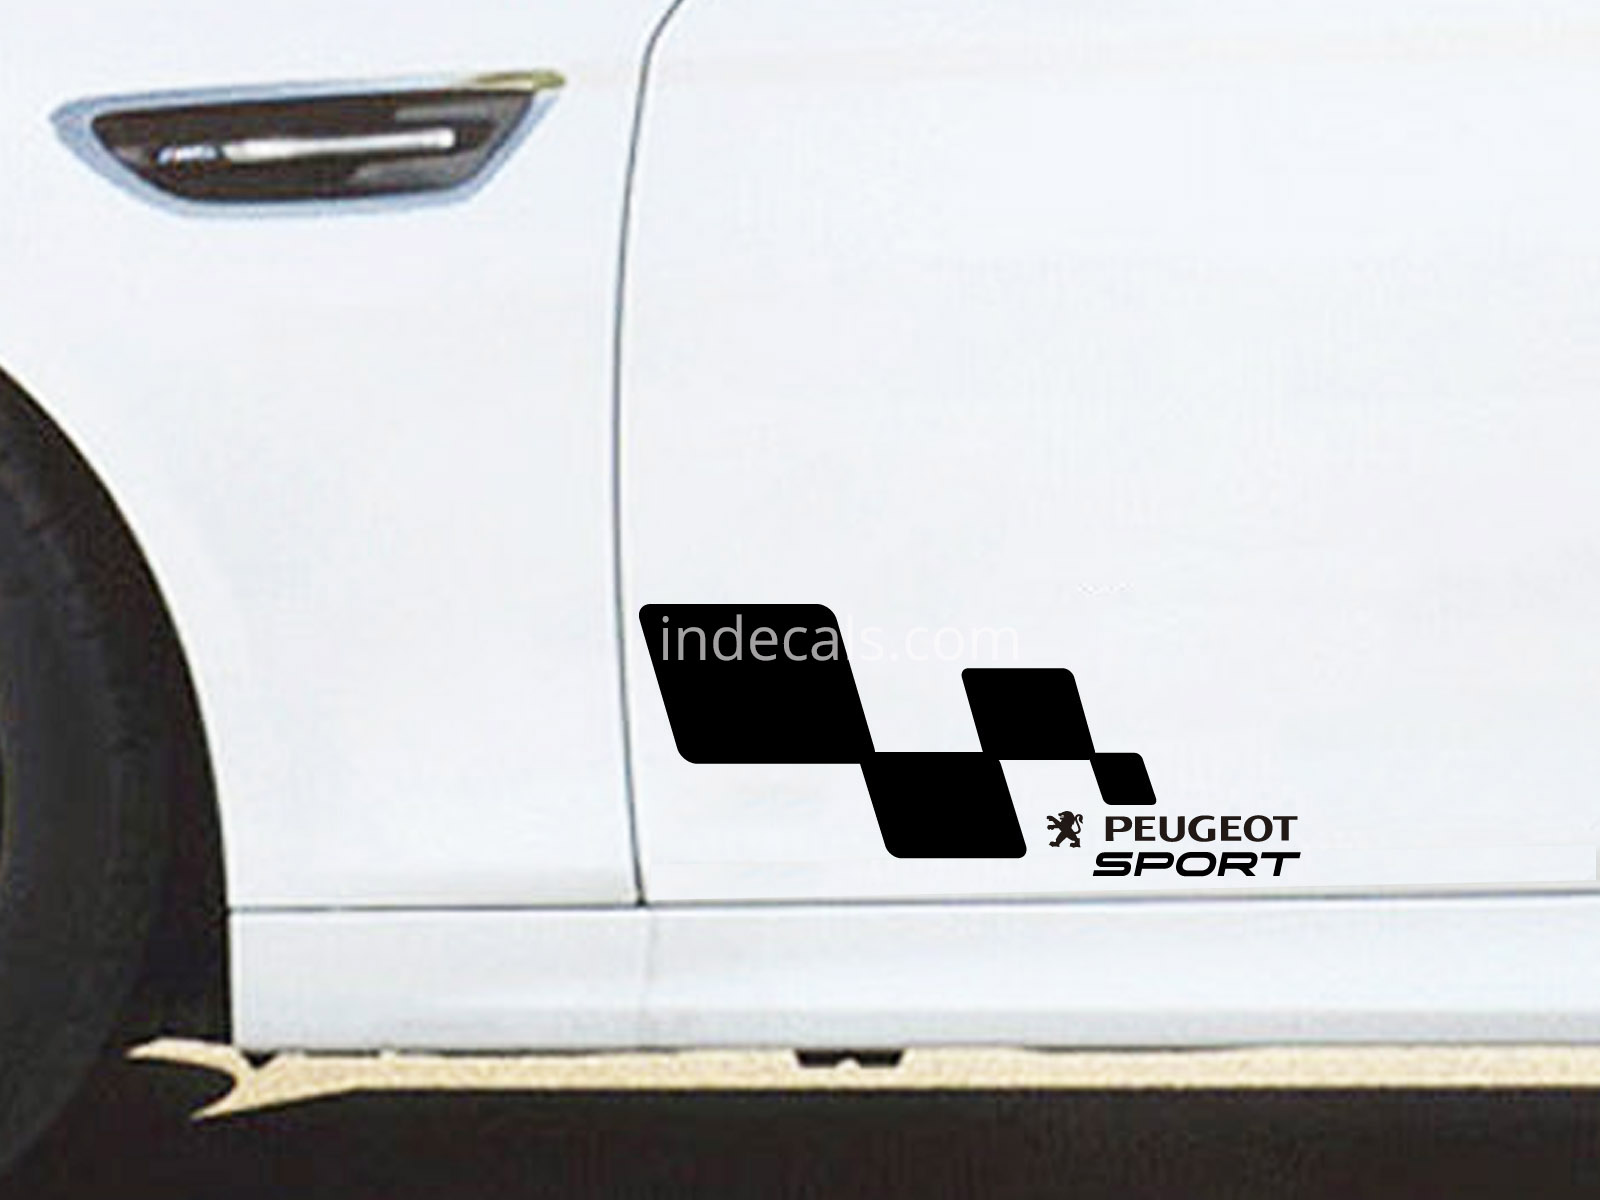 2 x Peugeot Racing Flag Stickers - Black